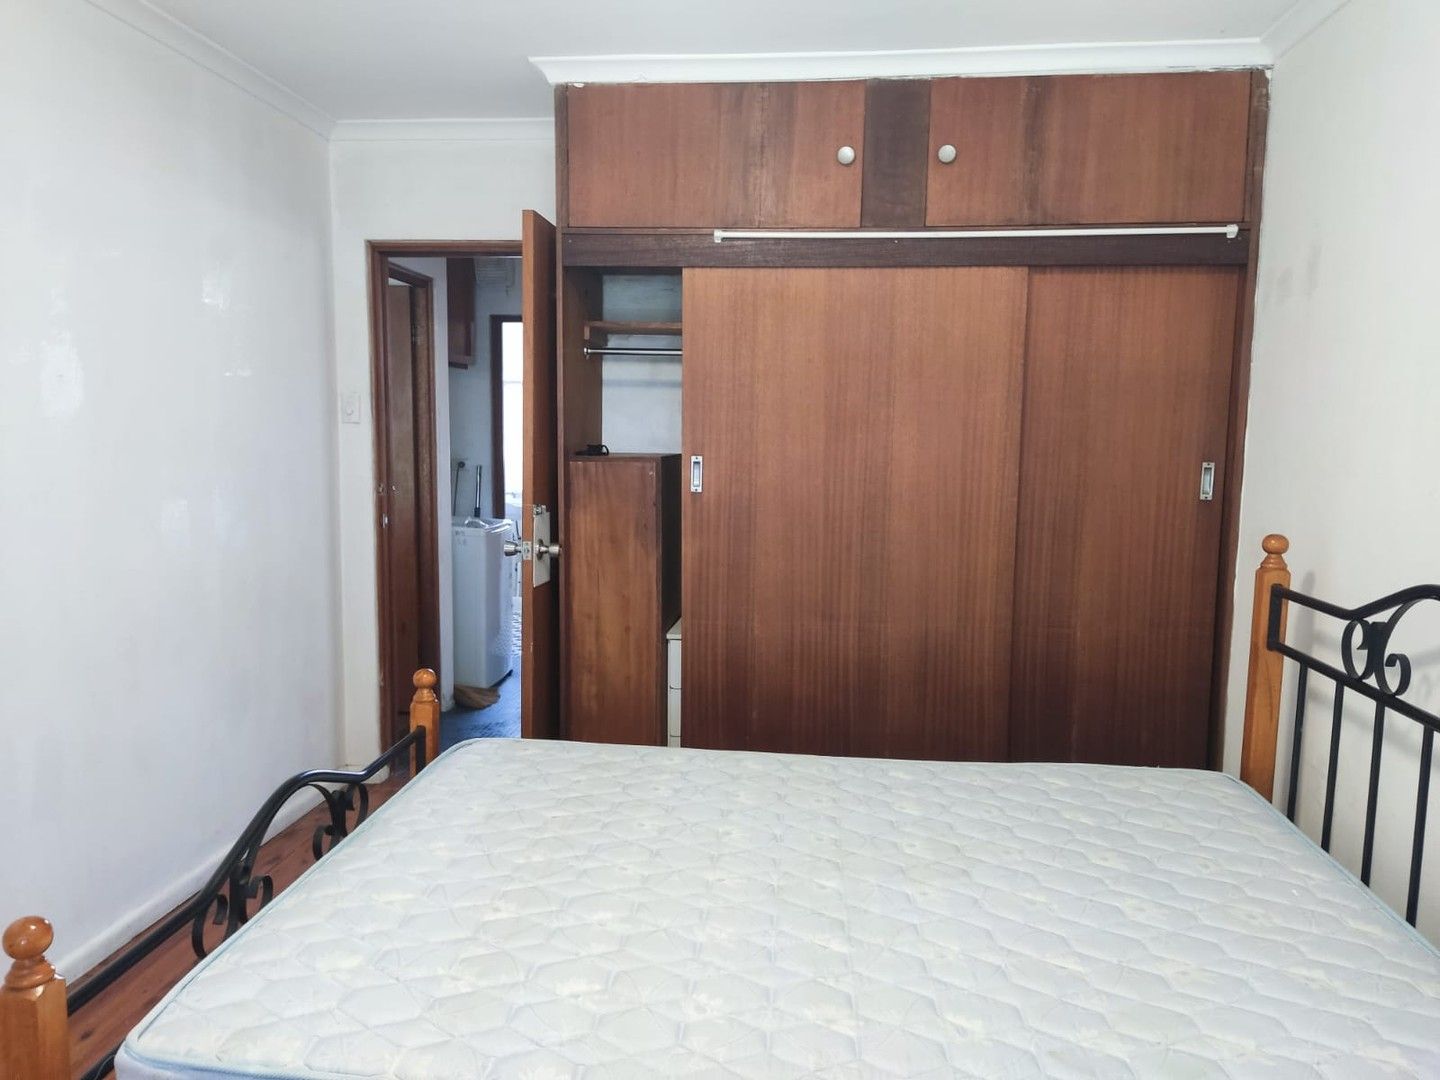 2 bedrooms House in 7/144 Frederick Street ASHFIELD NSW, 2131